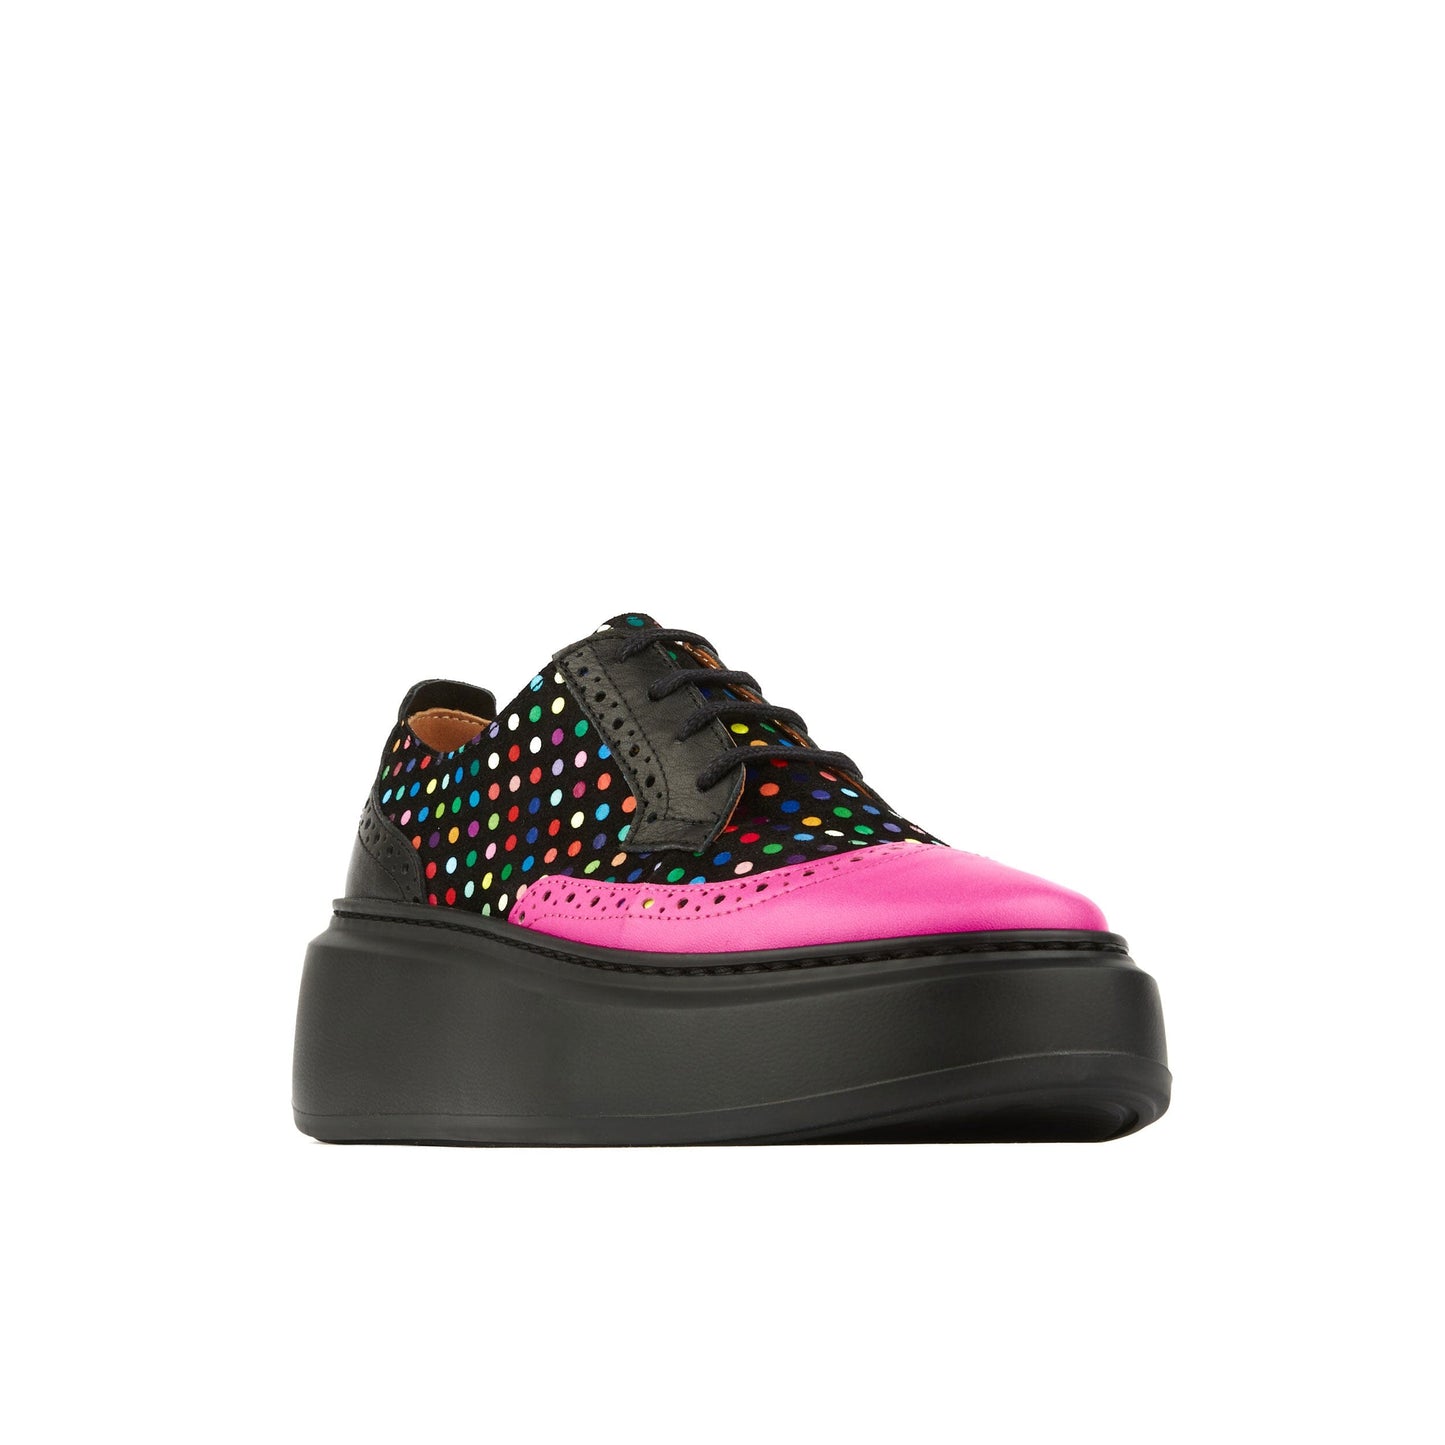 Artist Abba - Black & Pink & Multi Disco Dots Womens Designer Sneakers Embassy London 